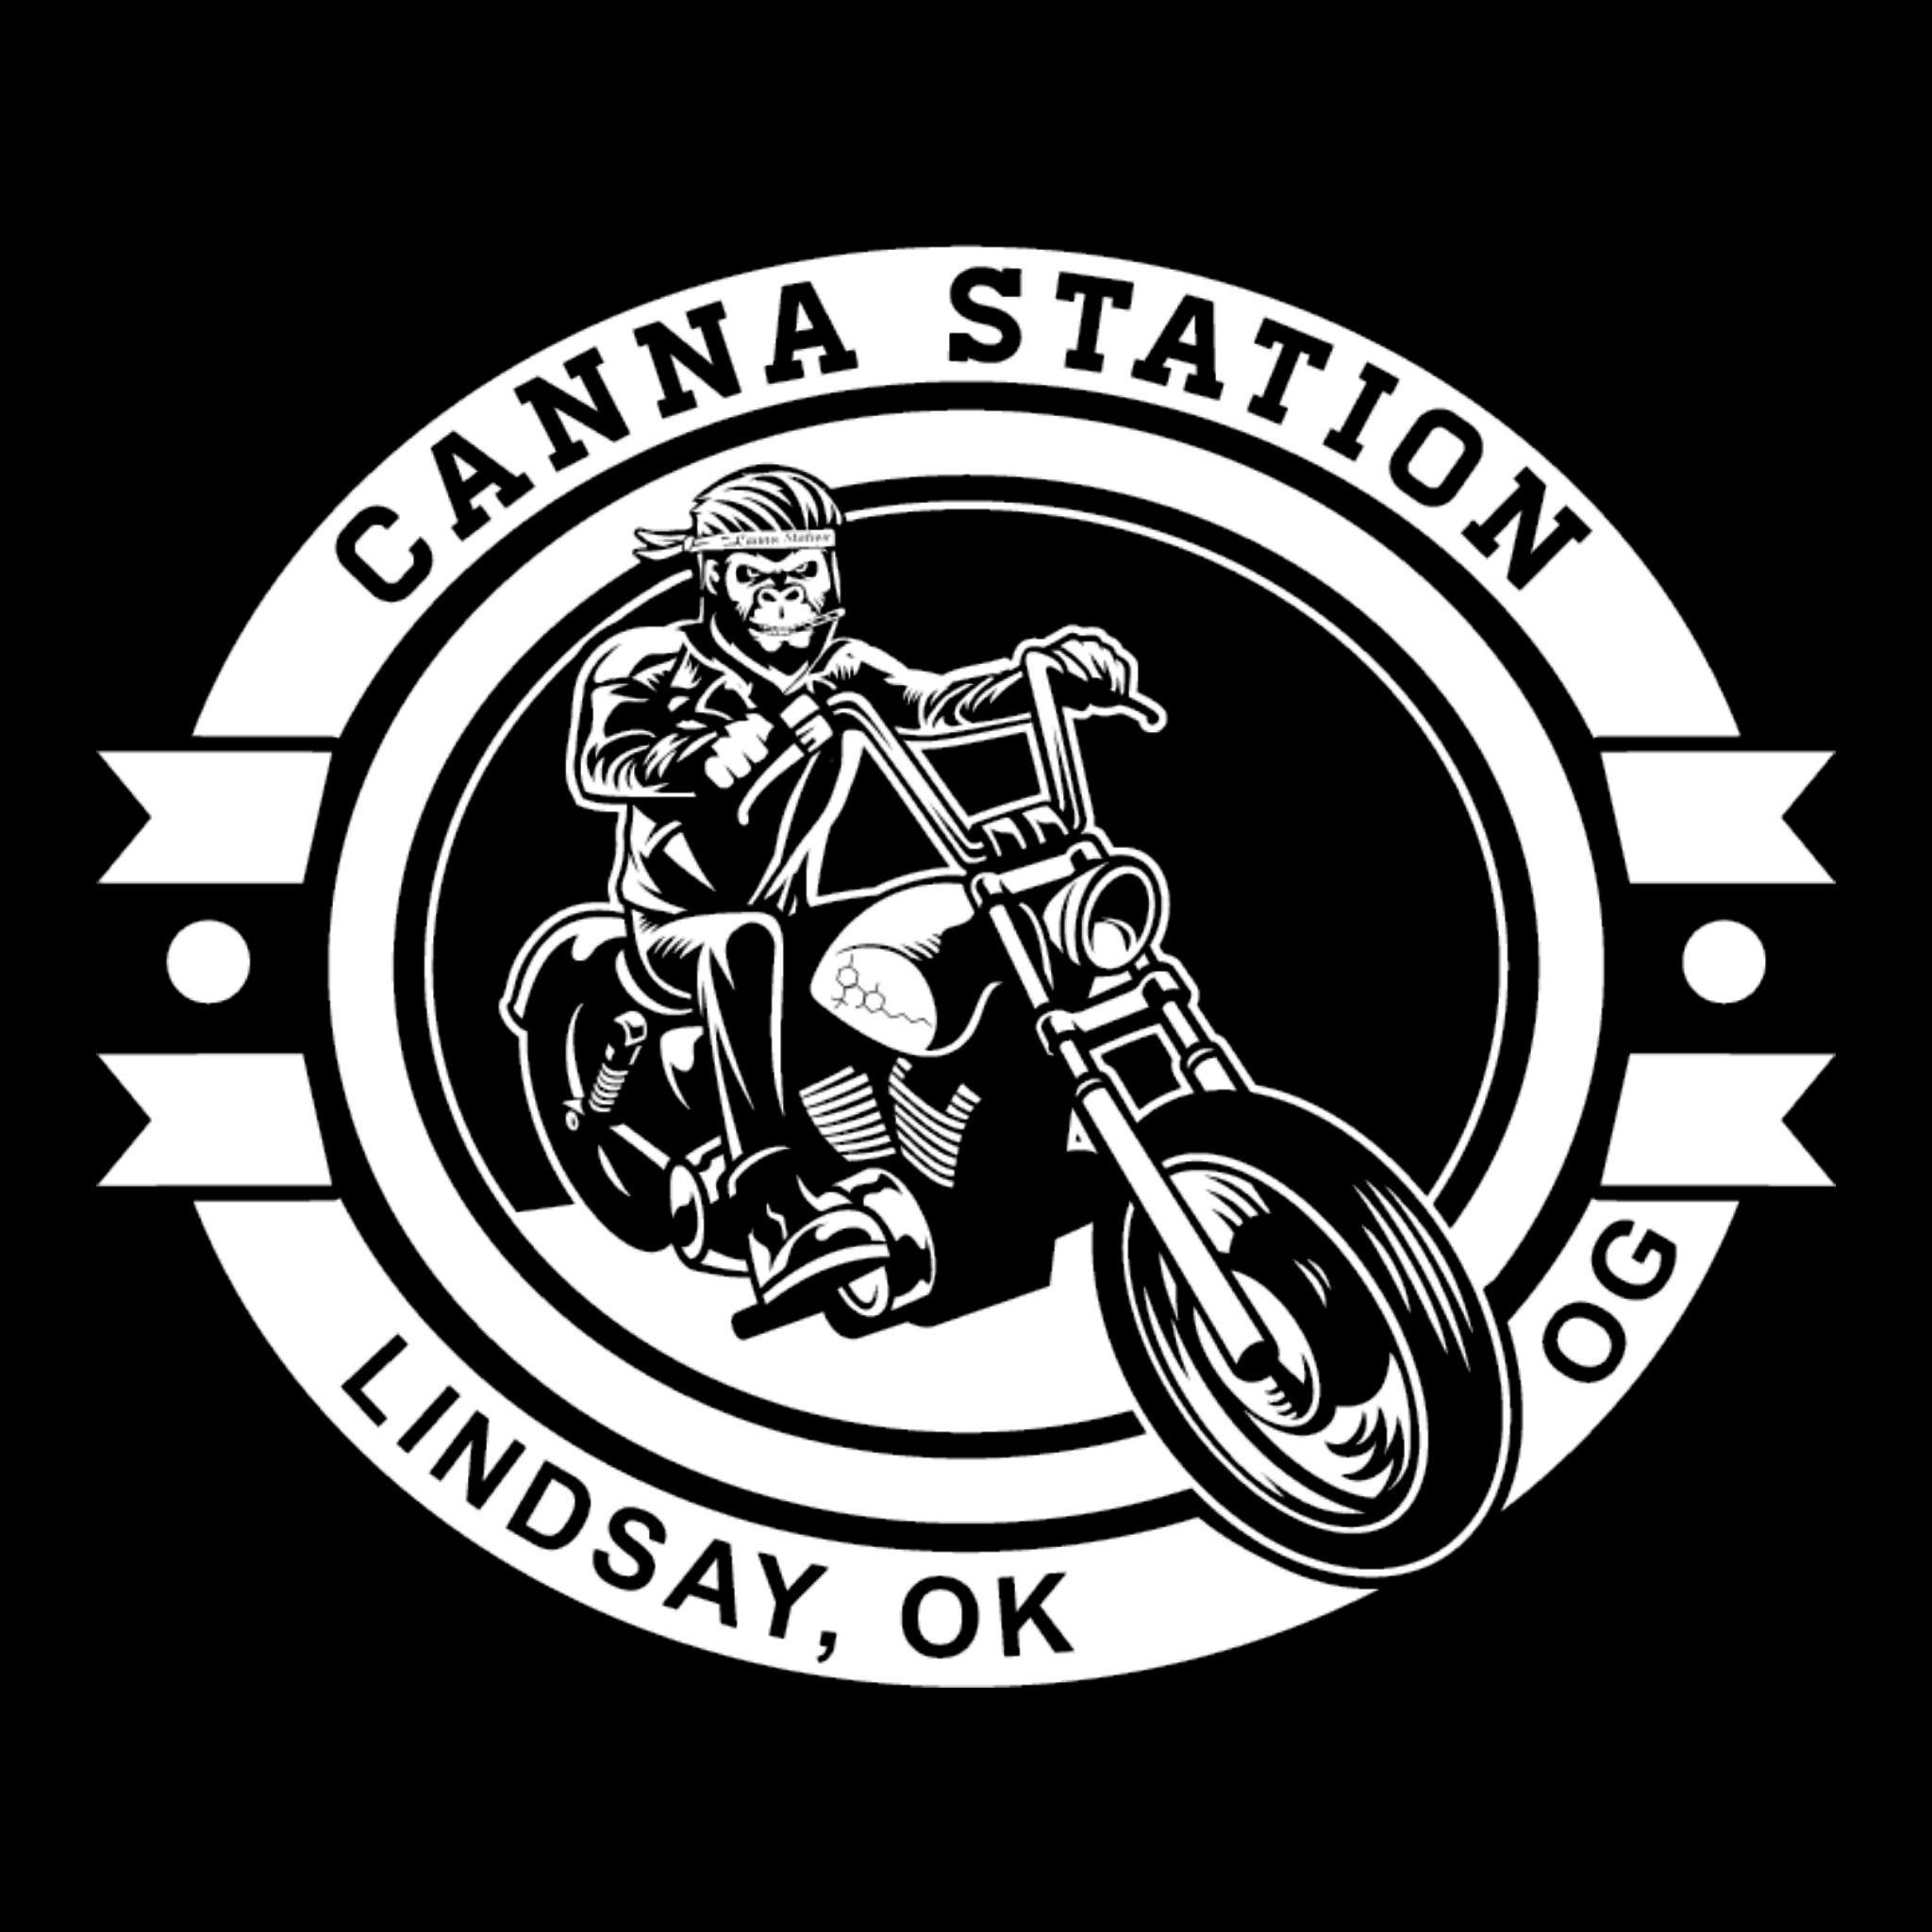 The Canna Station logo